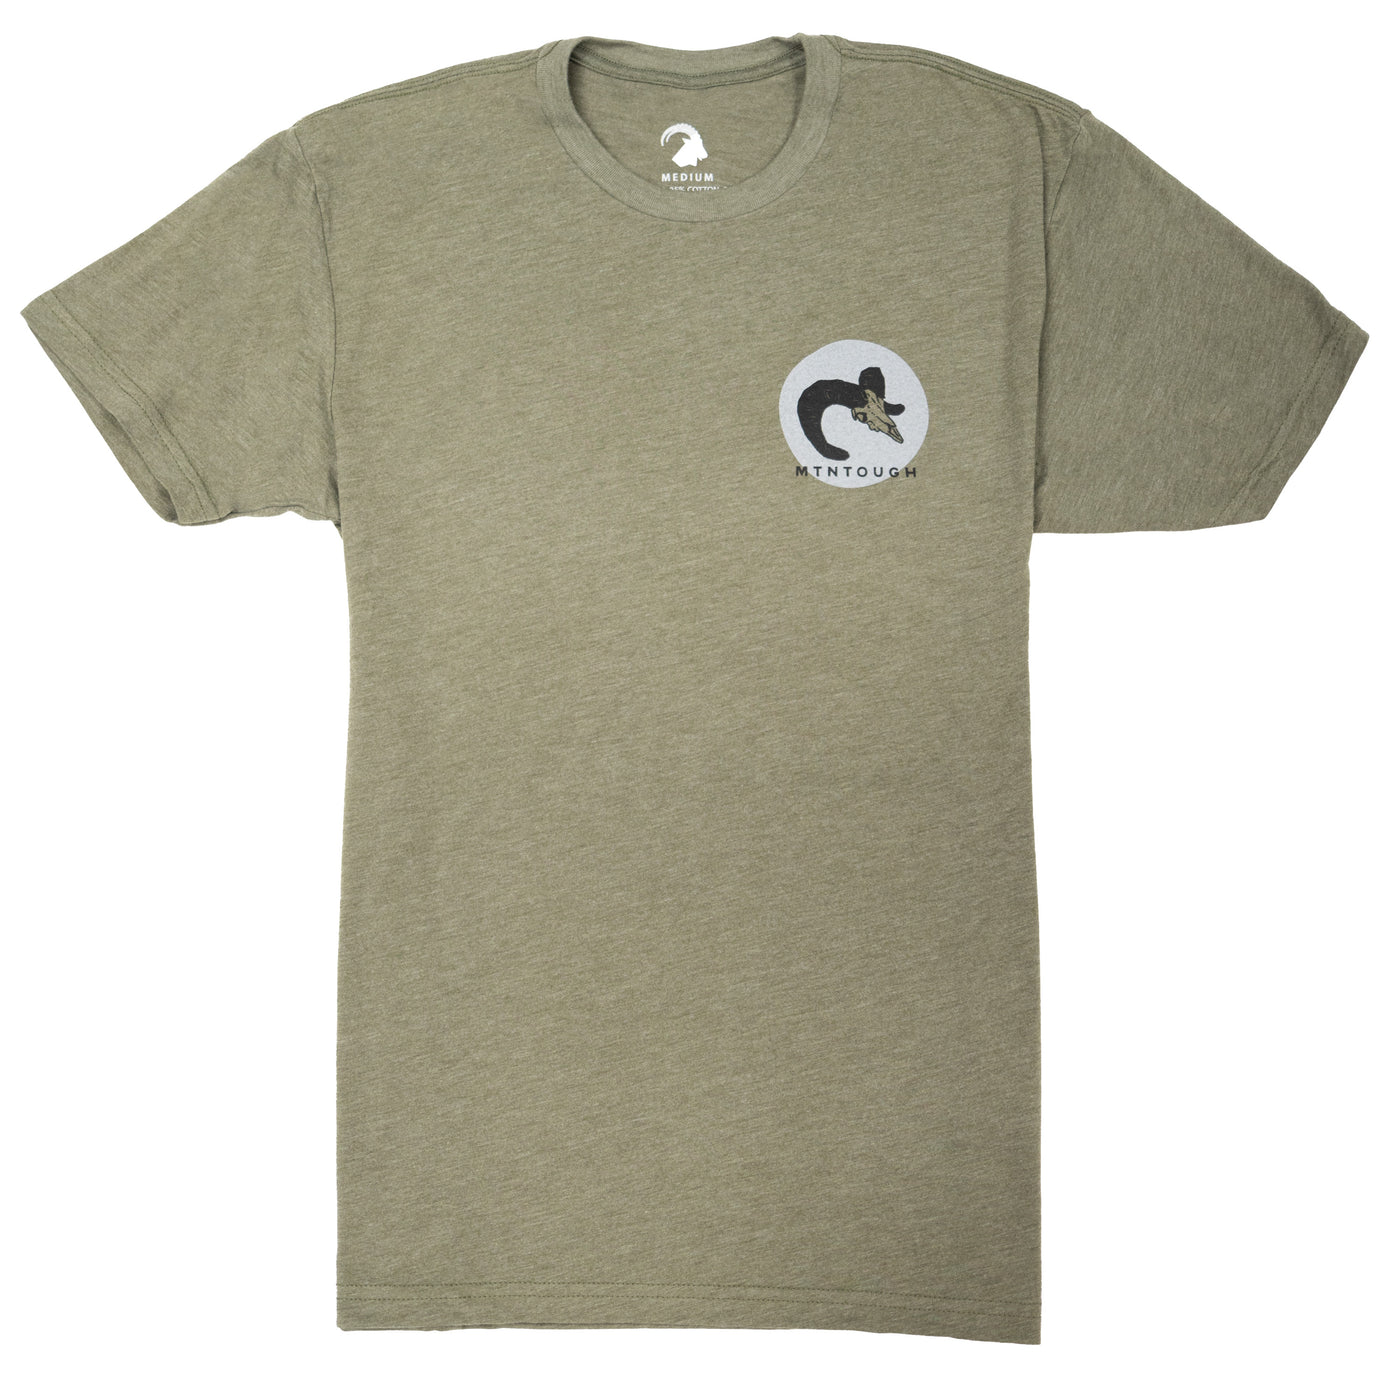 MTNTOUGH Bighorn T-Shirt - Military Green